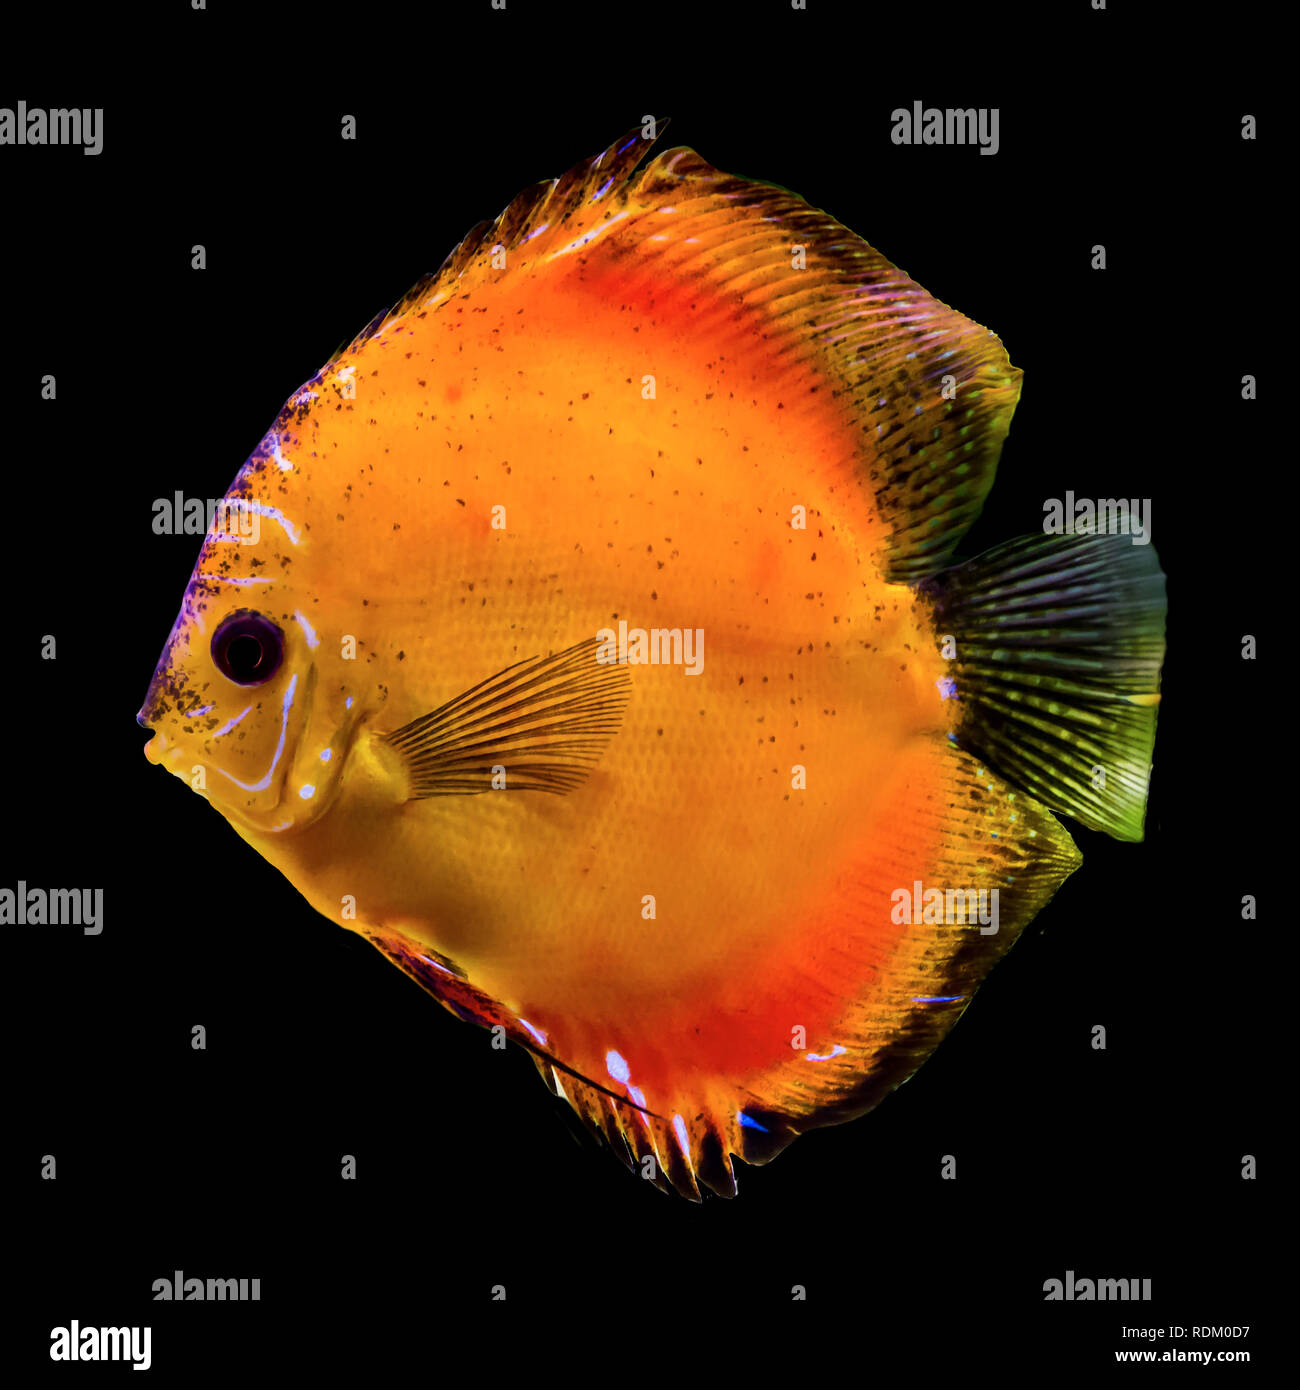 https://c8.alamy.com/comp/RDM0D7/orange-tropical-fish-from-the-amazon-river-symphysodon-aegufasciatus-the-aquarium-fish-isolated-photo-on-black-background-RDM0D7.jpg